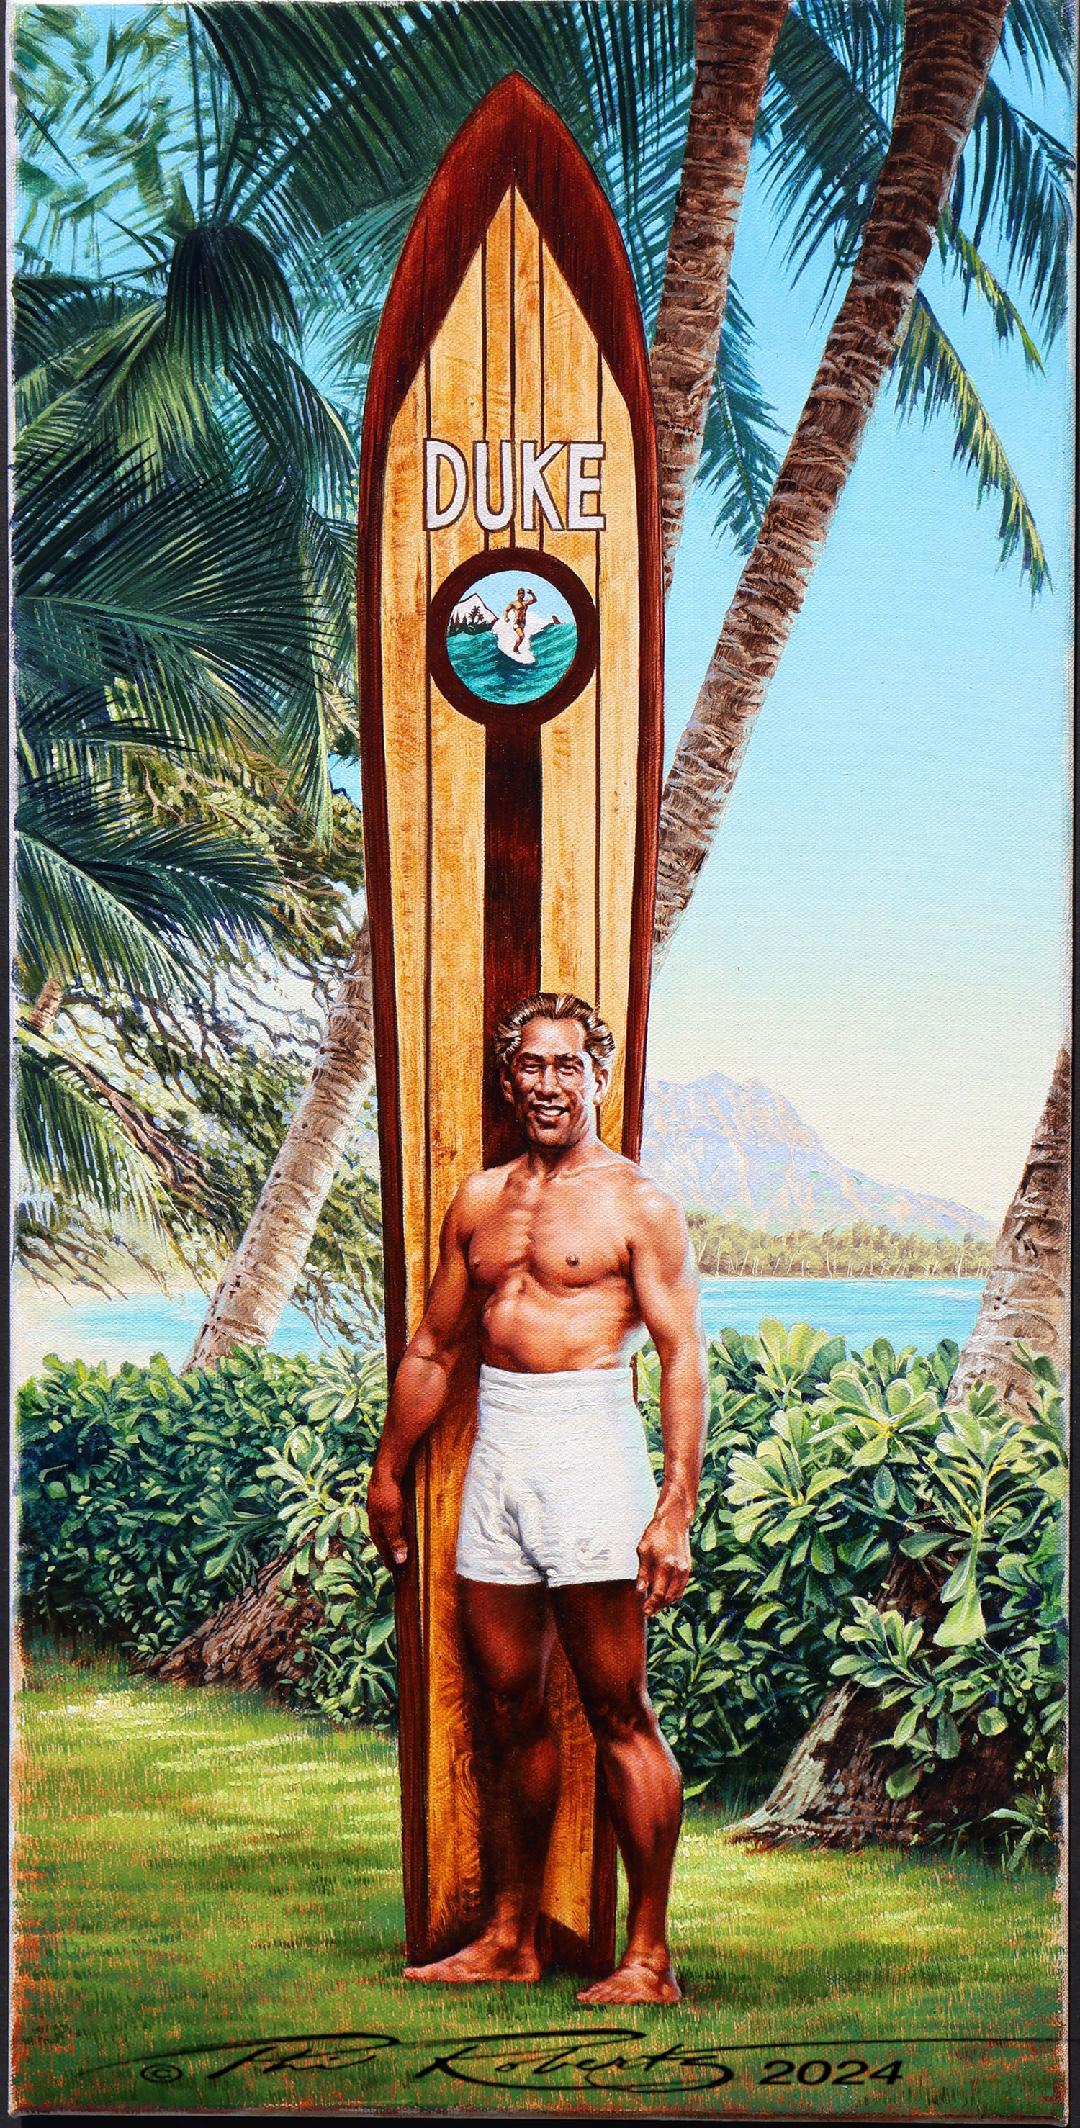 Duke Honolulu Oahu Surf Club, Waikiki(Original) by Phil Roberts